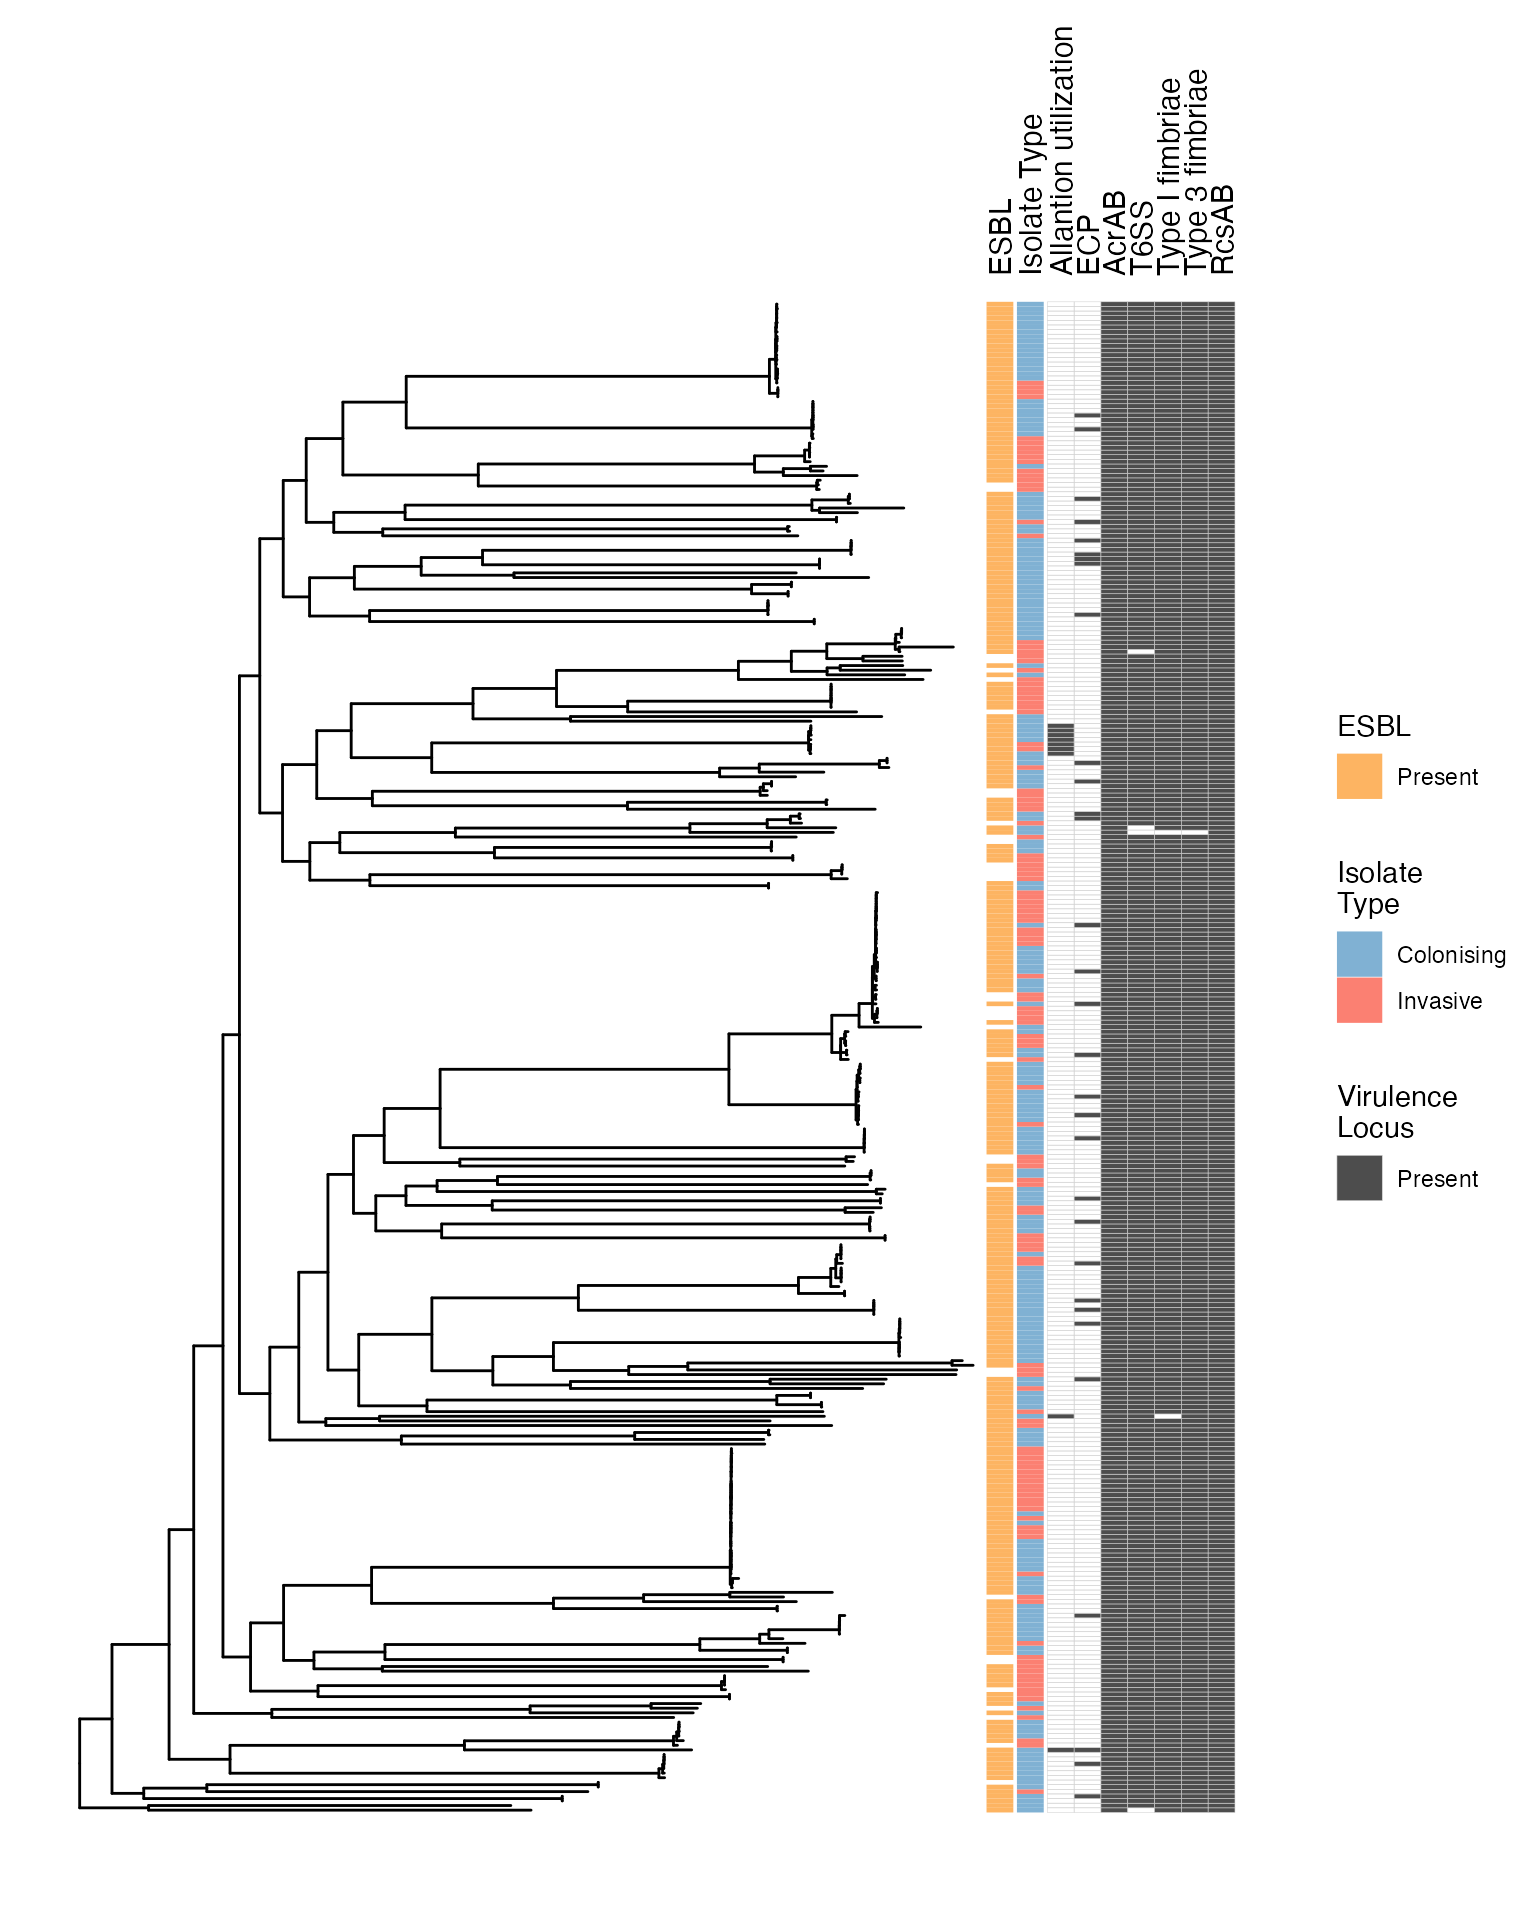 Midpoint rooted core gene maximum likelihood phylogenetic tree of Malawian isolates, showing VFDB virulence determinants.